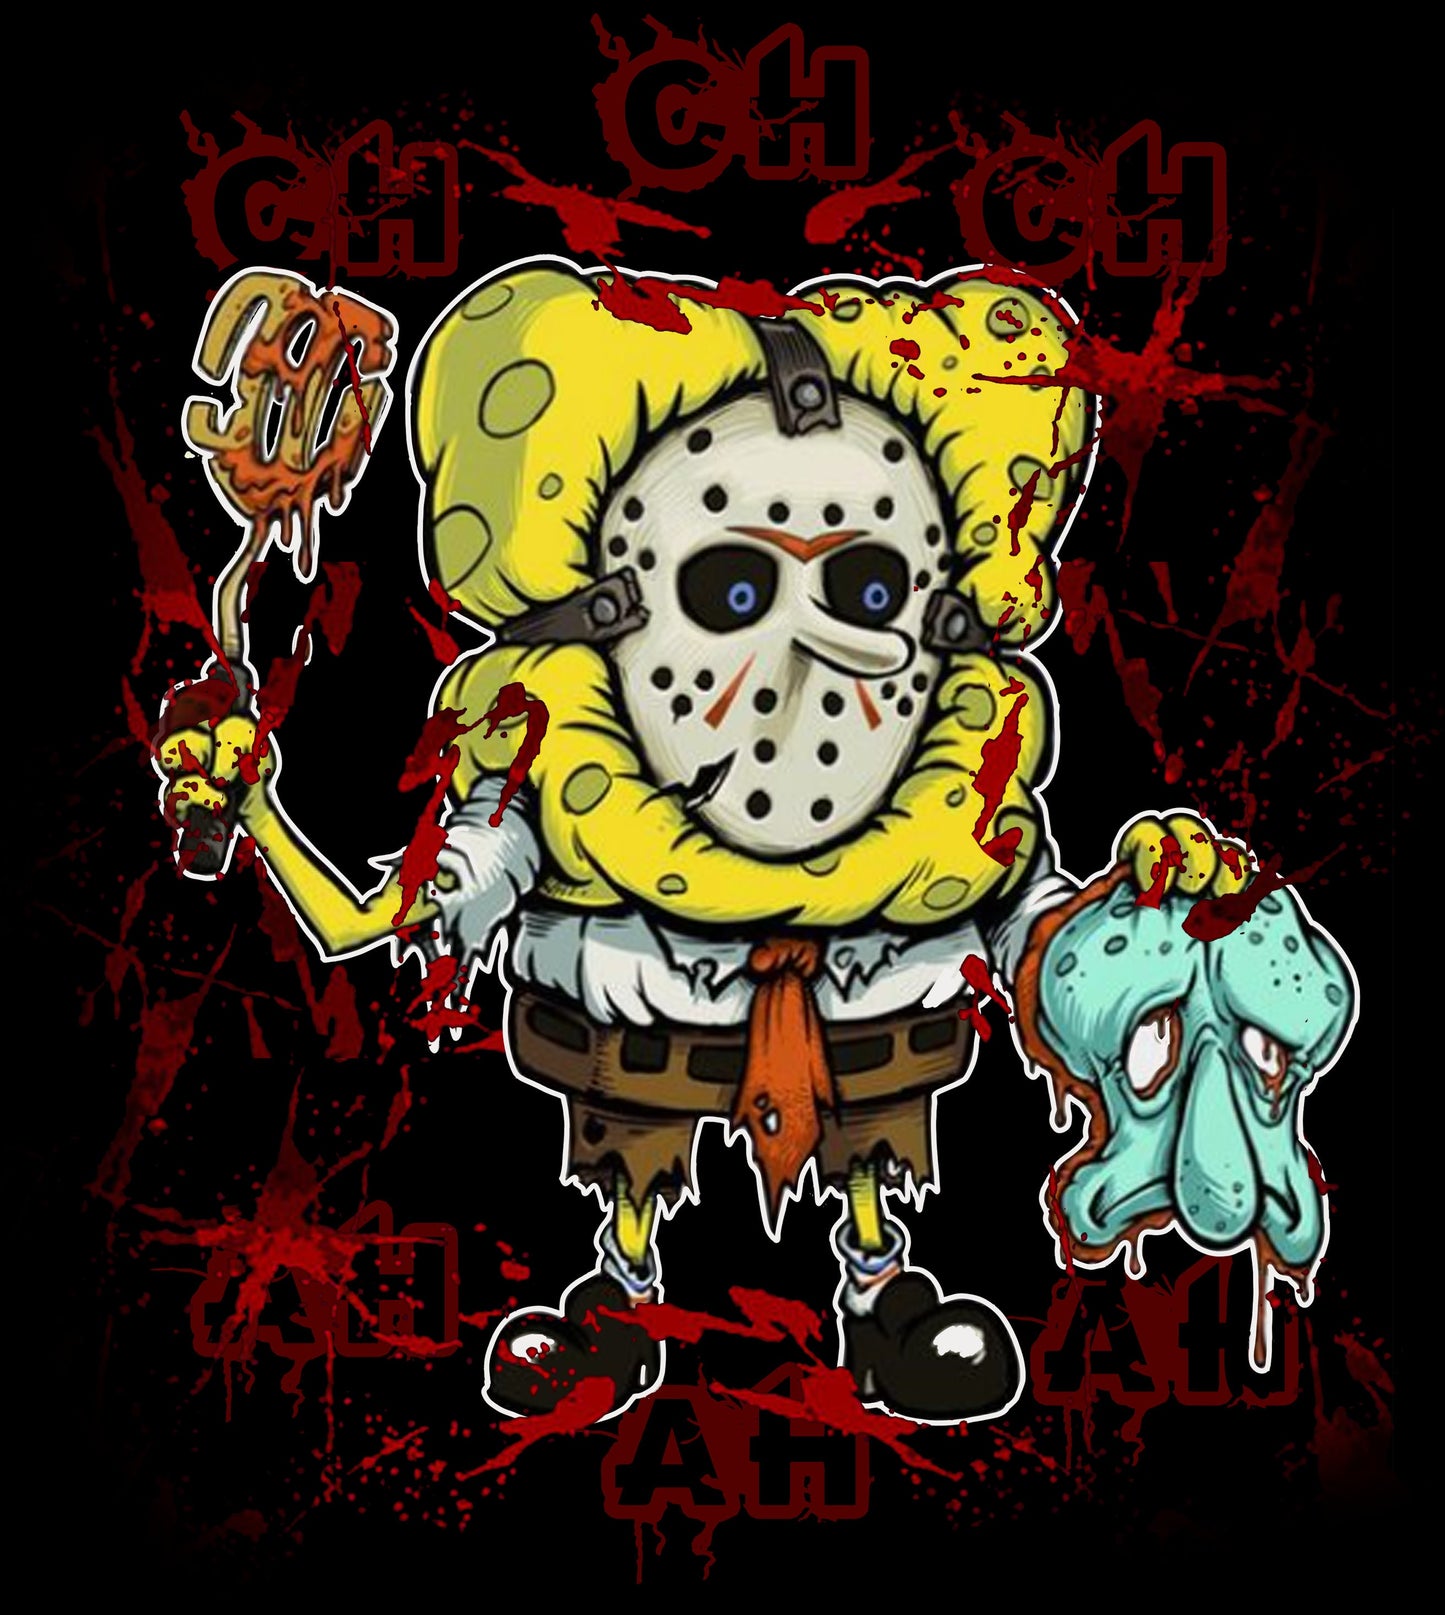 Halloween Spongebob Squidward Jason Vorhees Funny DTG Printed T Shirt